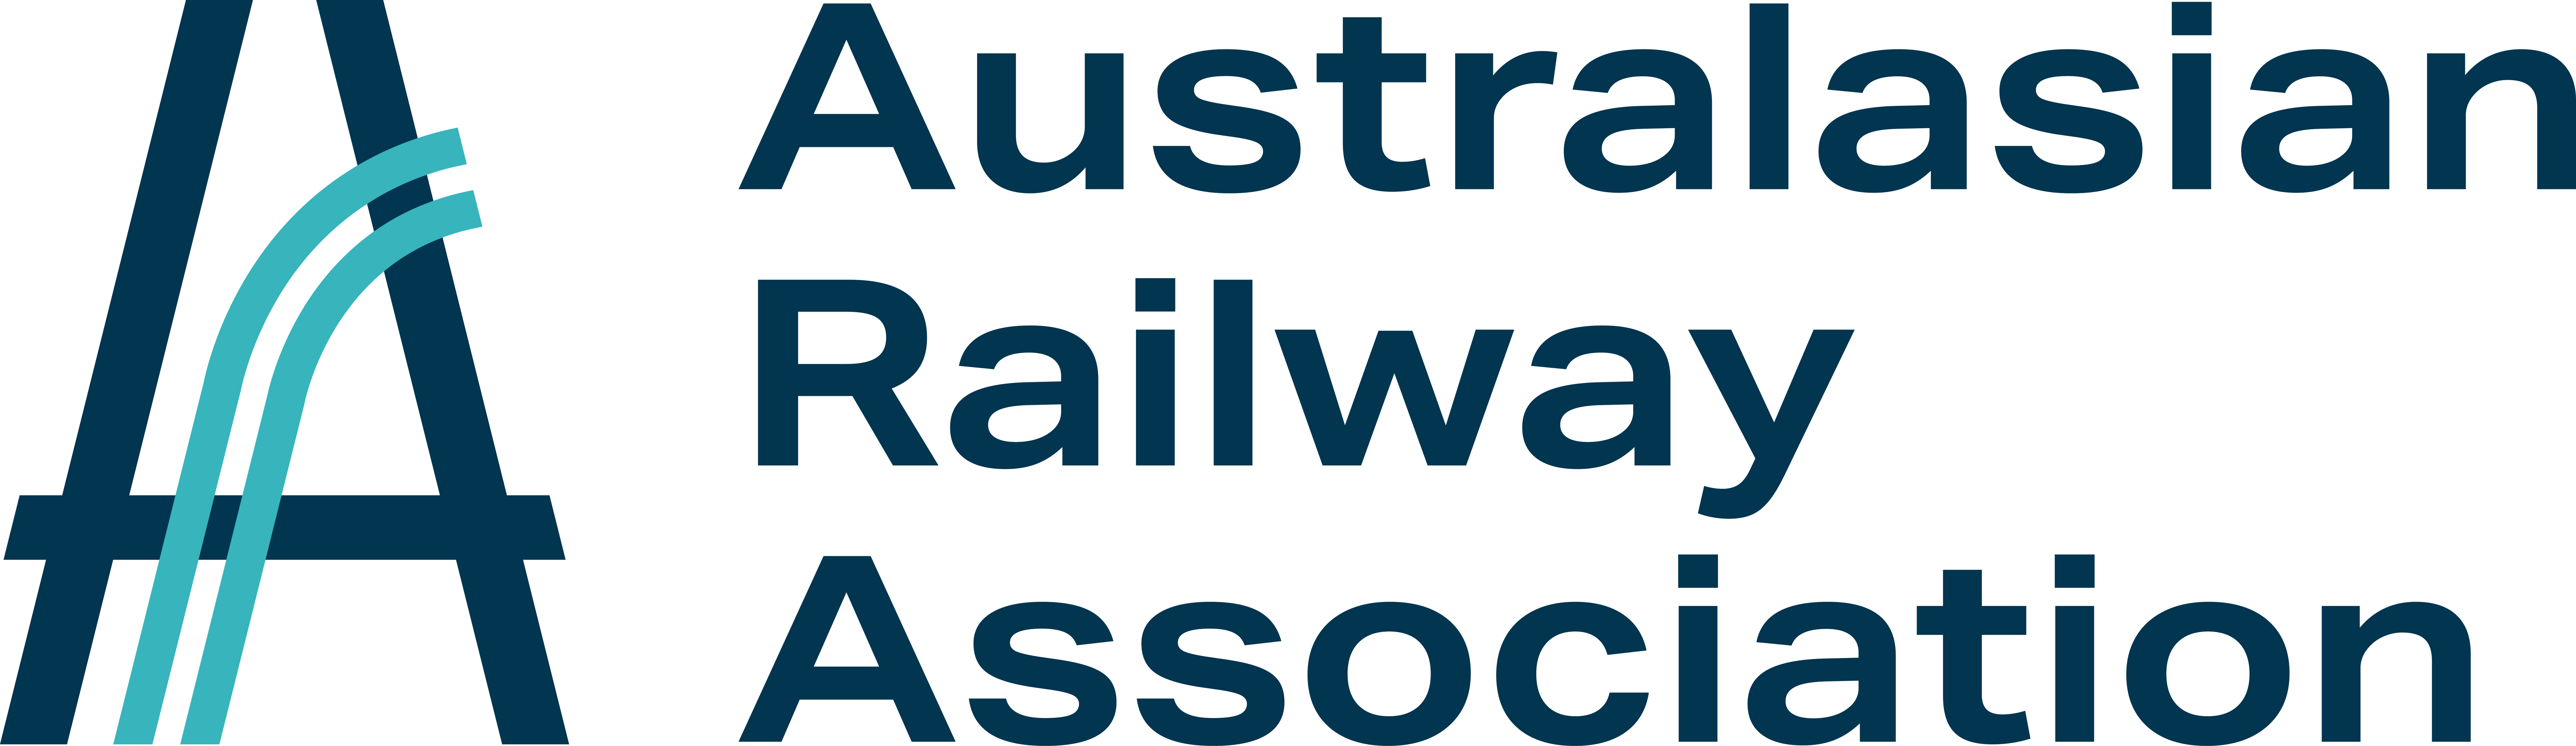 Australian Railway Association